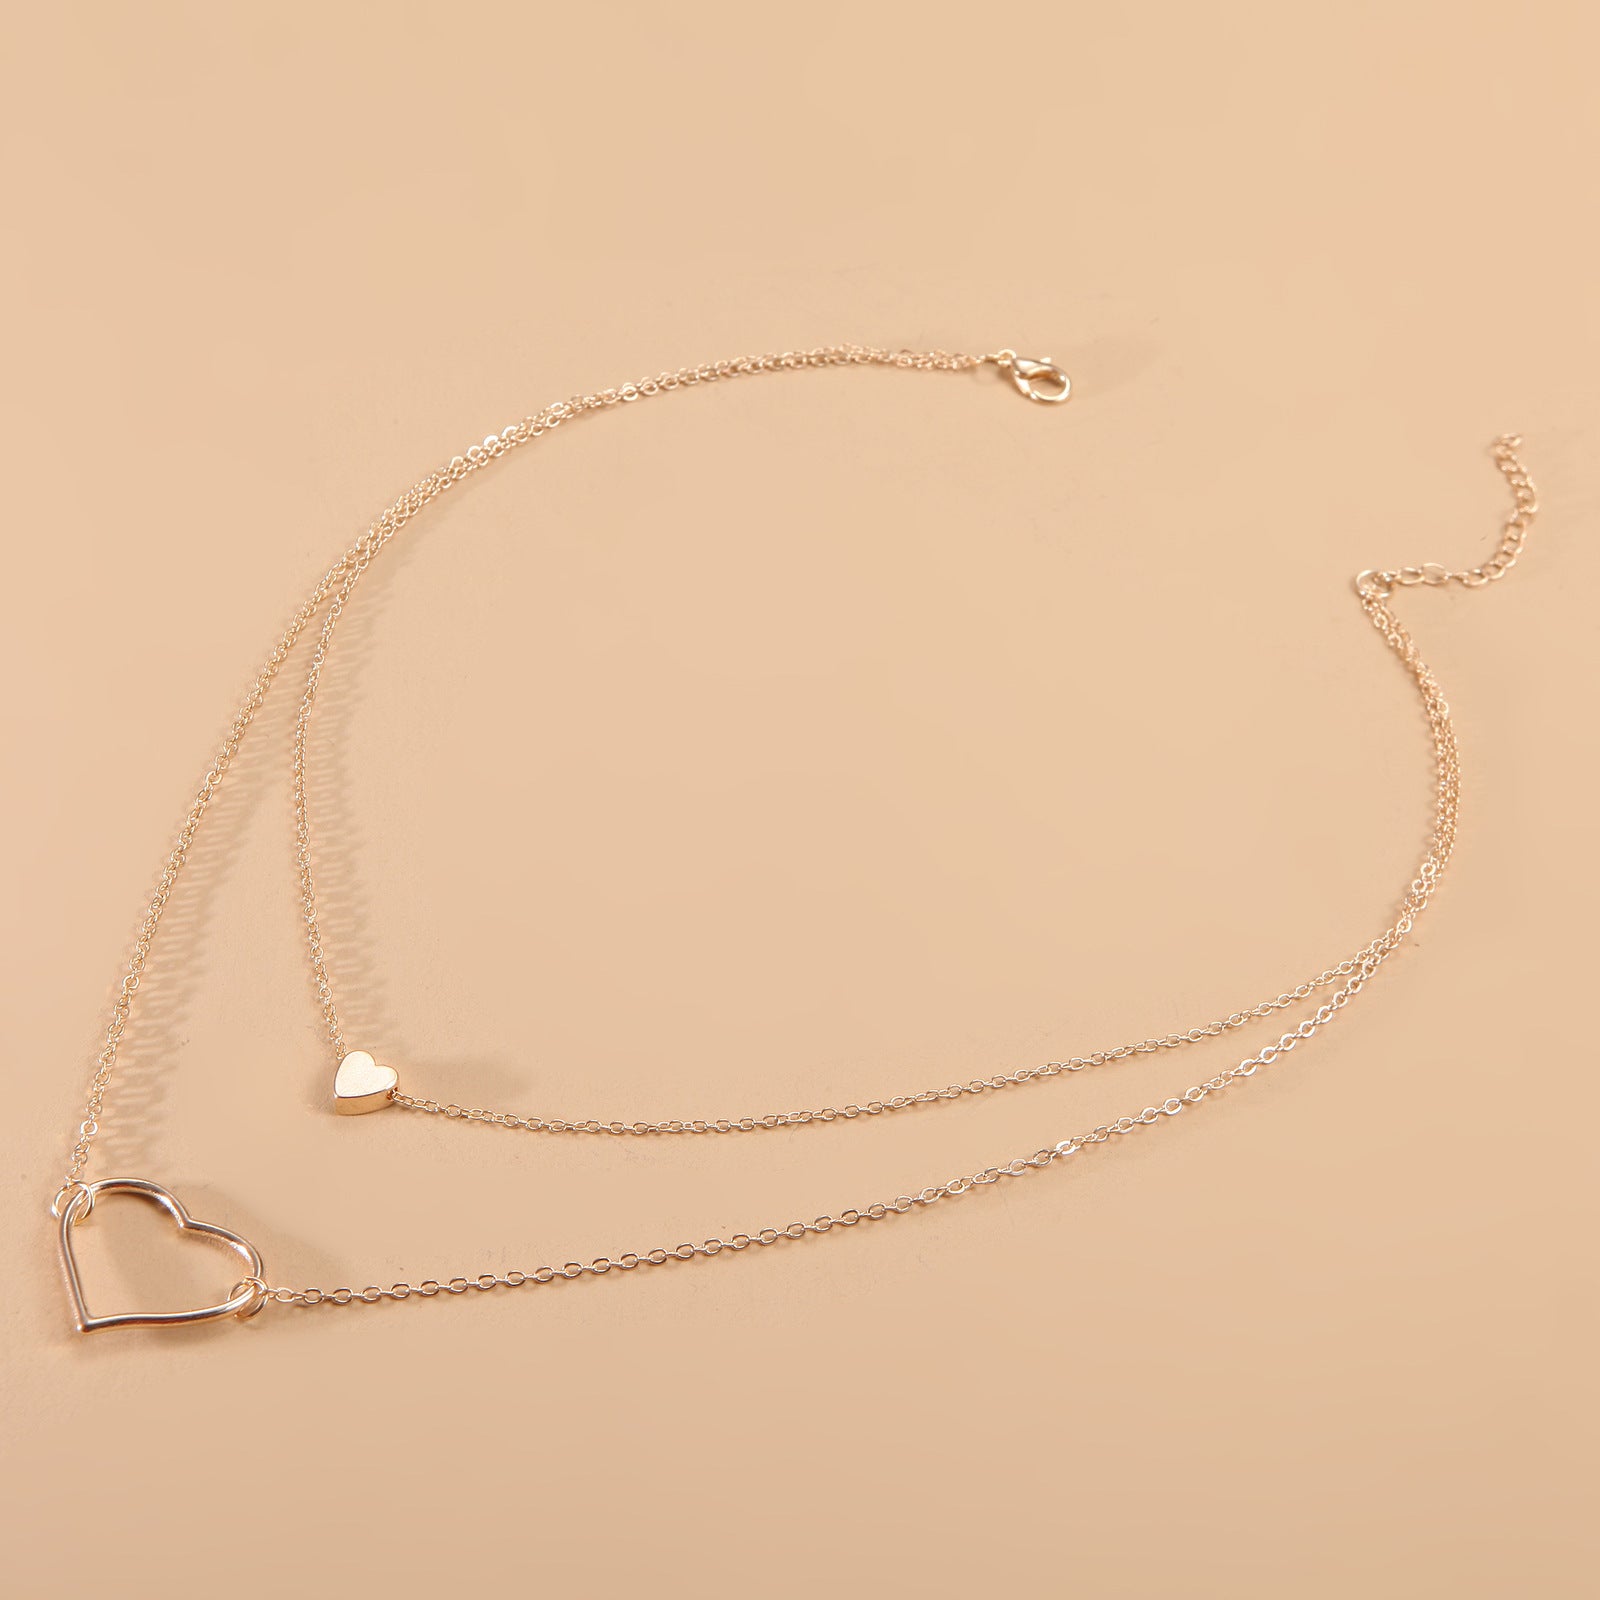 Women's Multilayer Chain Pendant Necklace